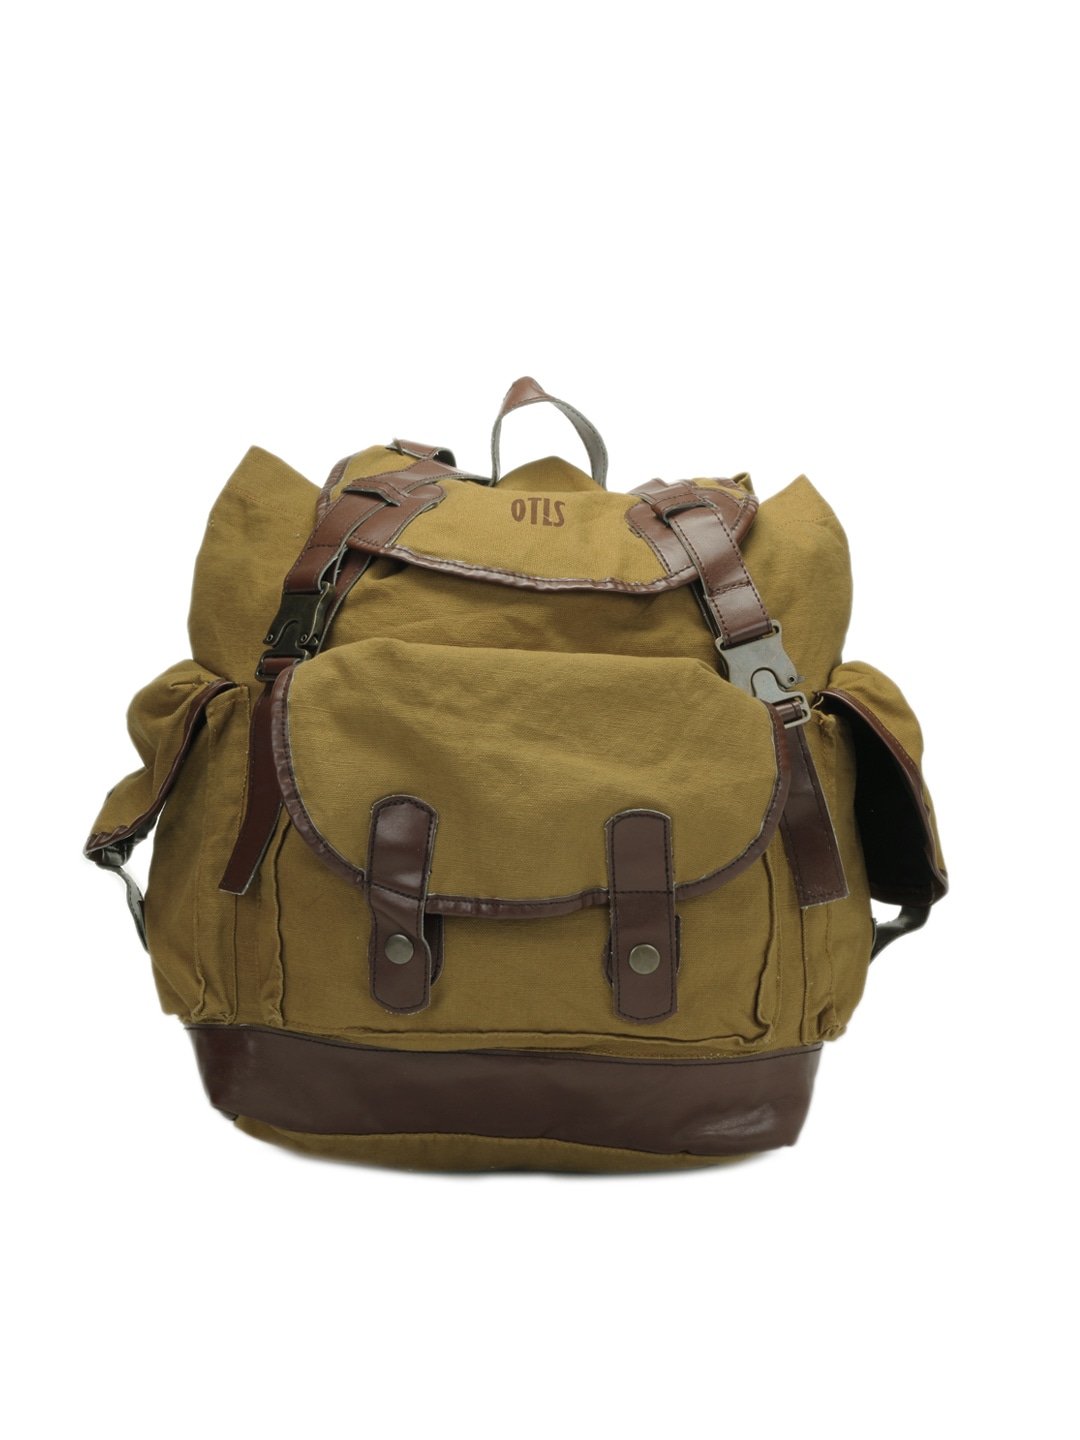 OTLS Unisex Mustard Brown Backpack